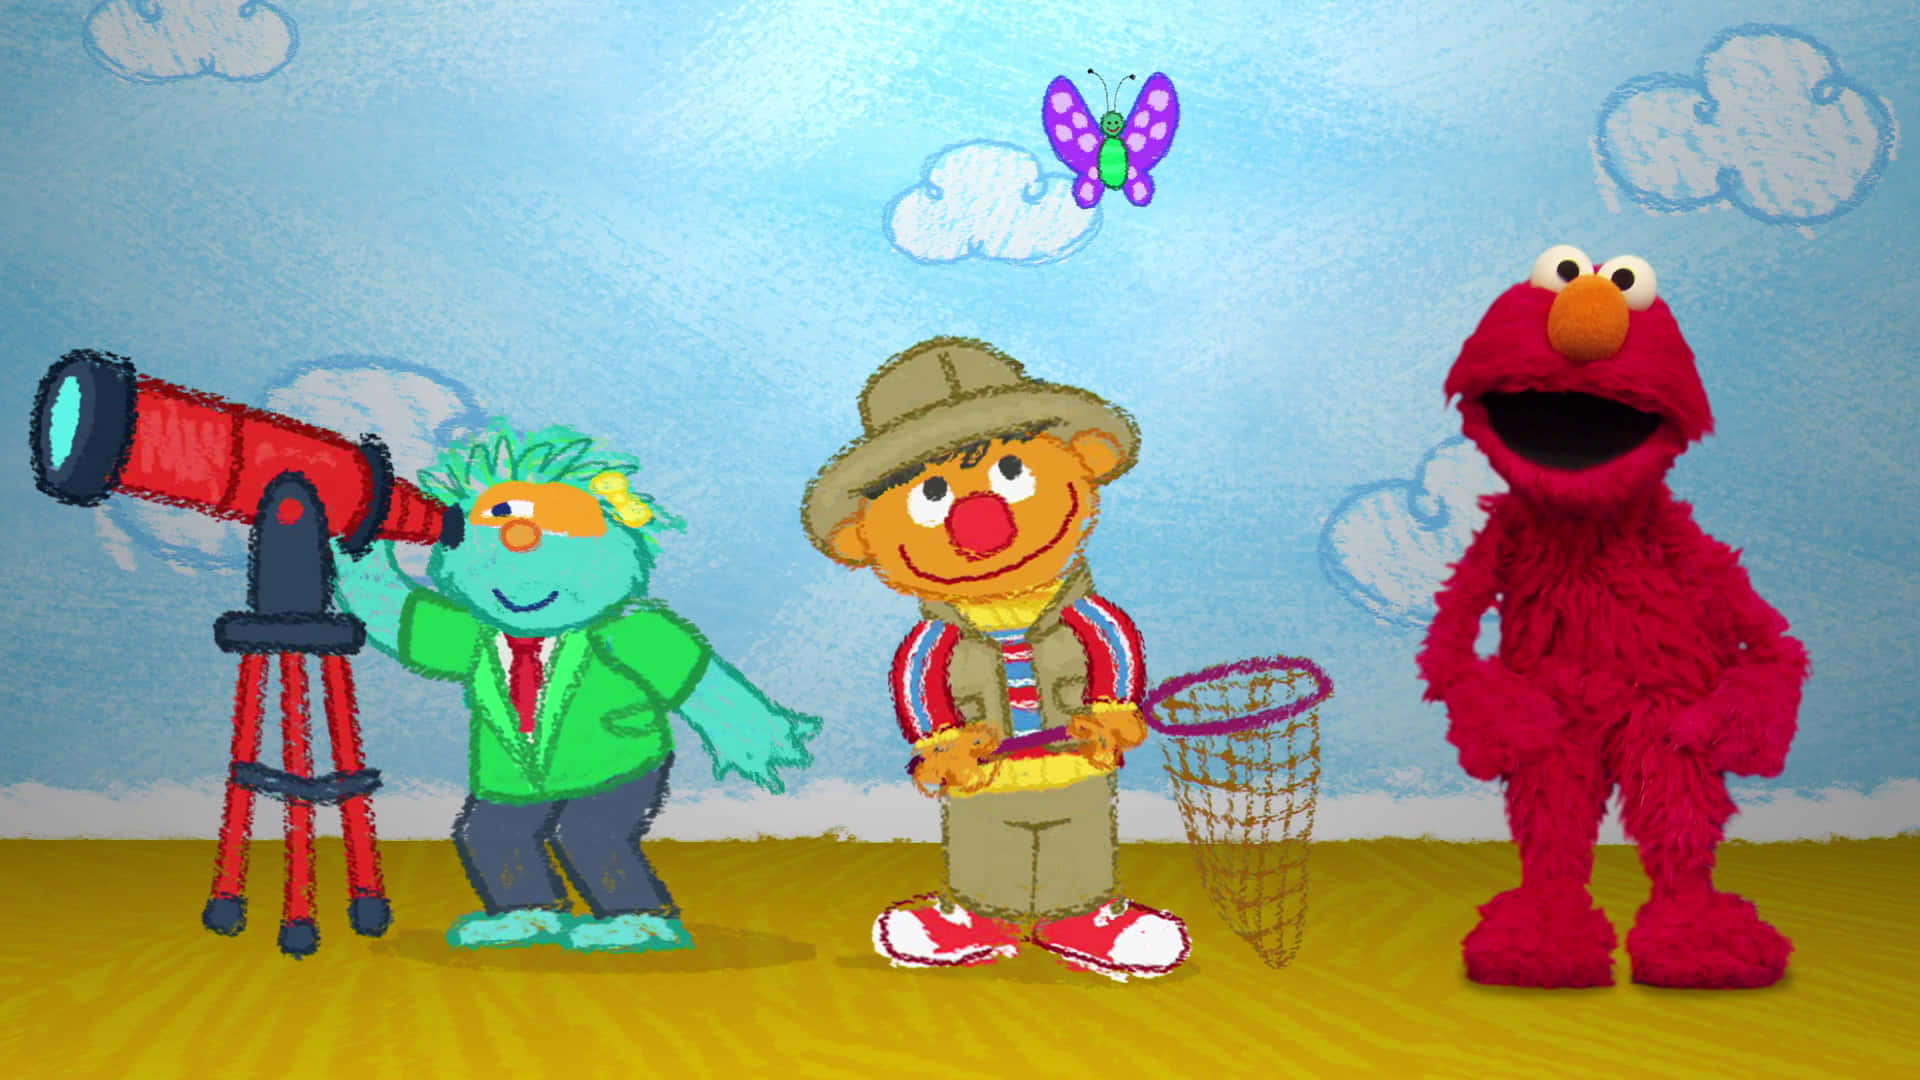 Elmo explores the colorful world of imagination.